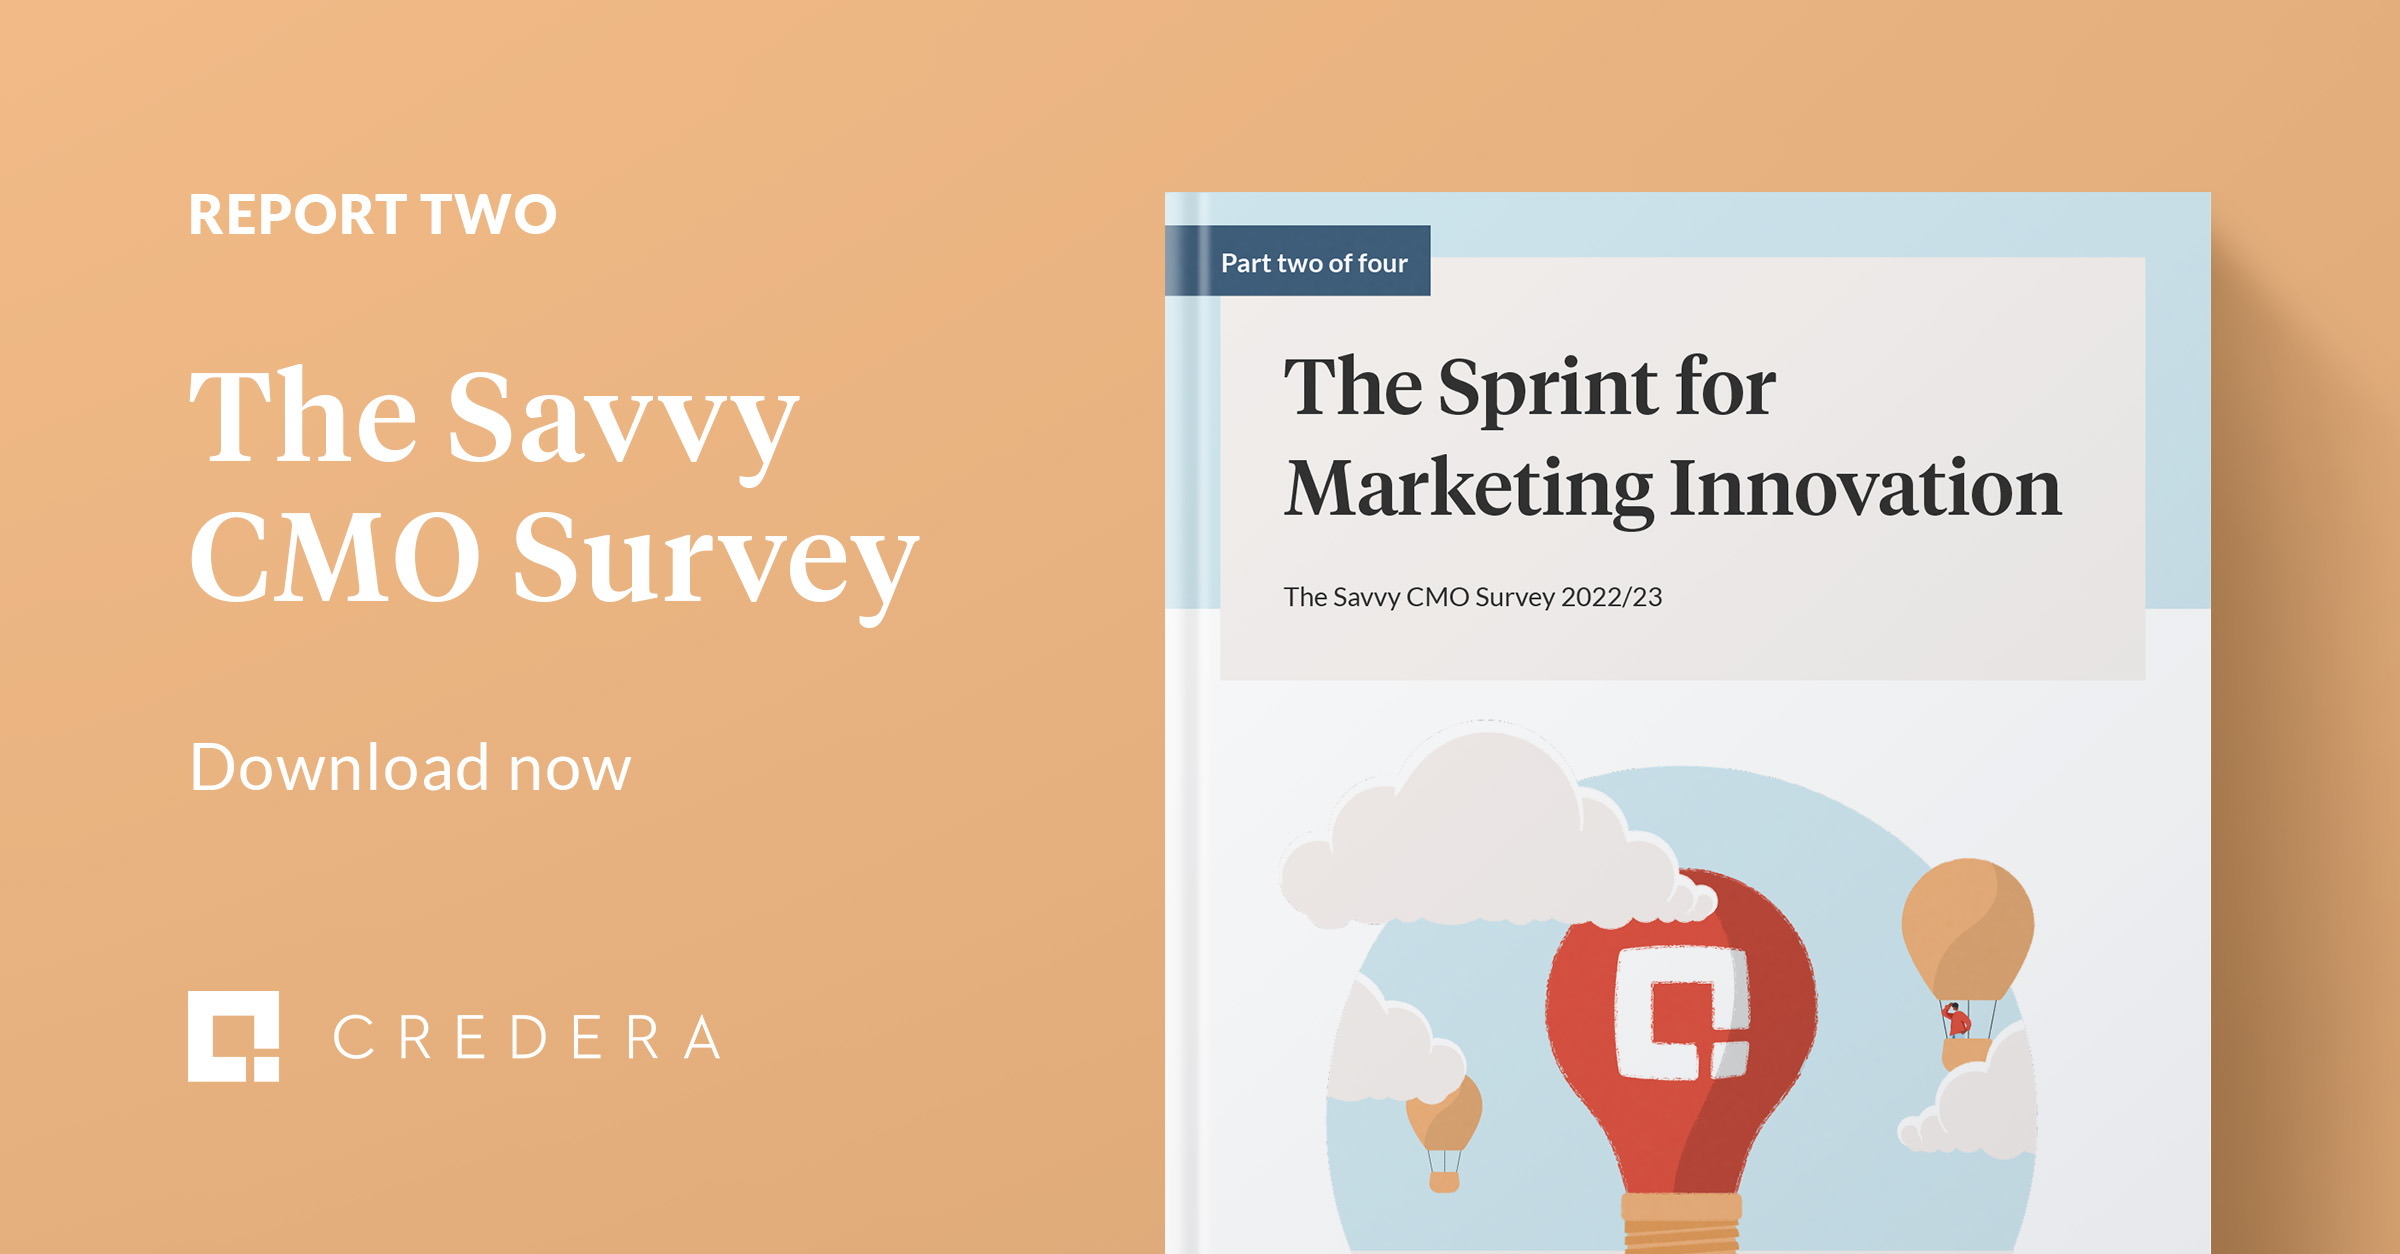 The Savvy CMO Survey Part 2: The Sprint for Marketing Innovation